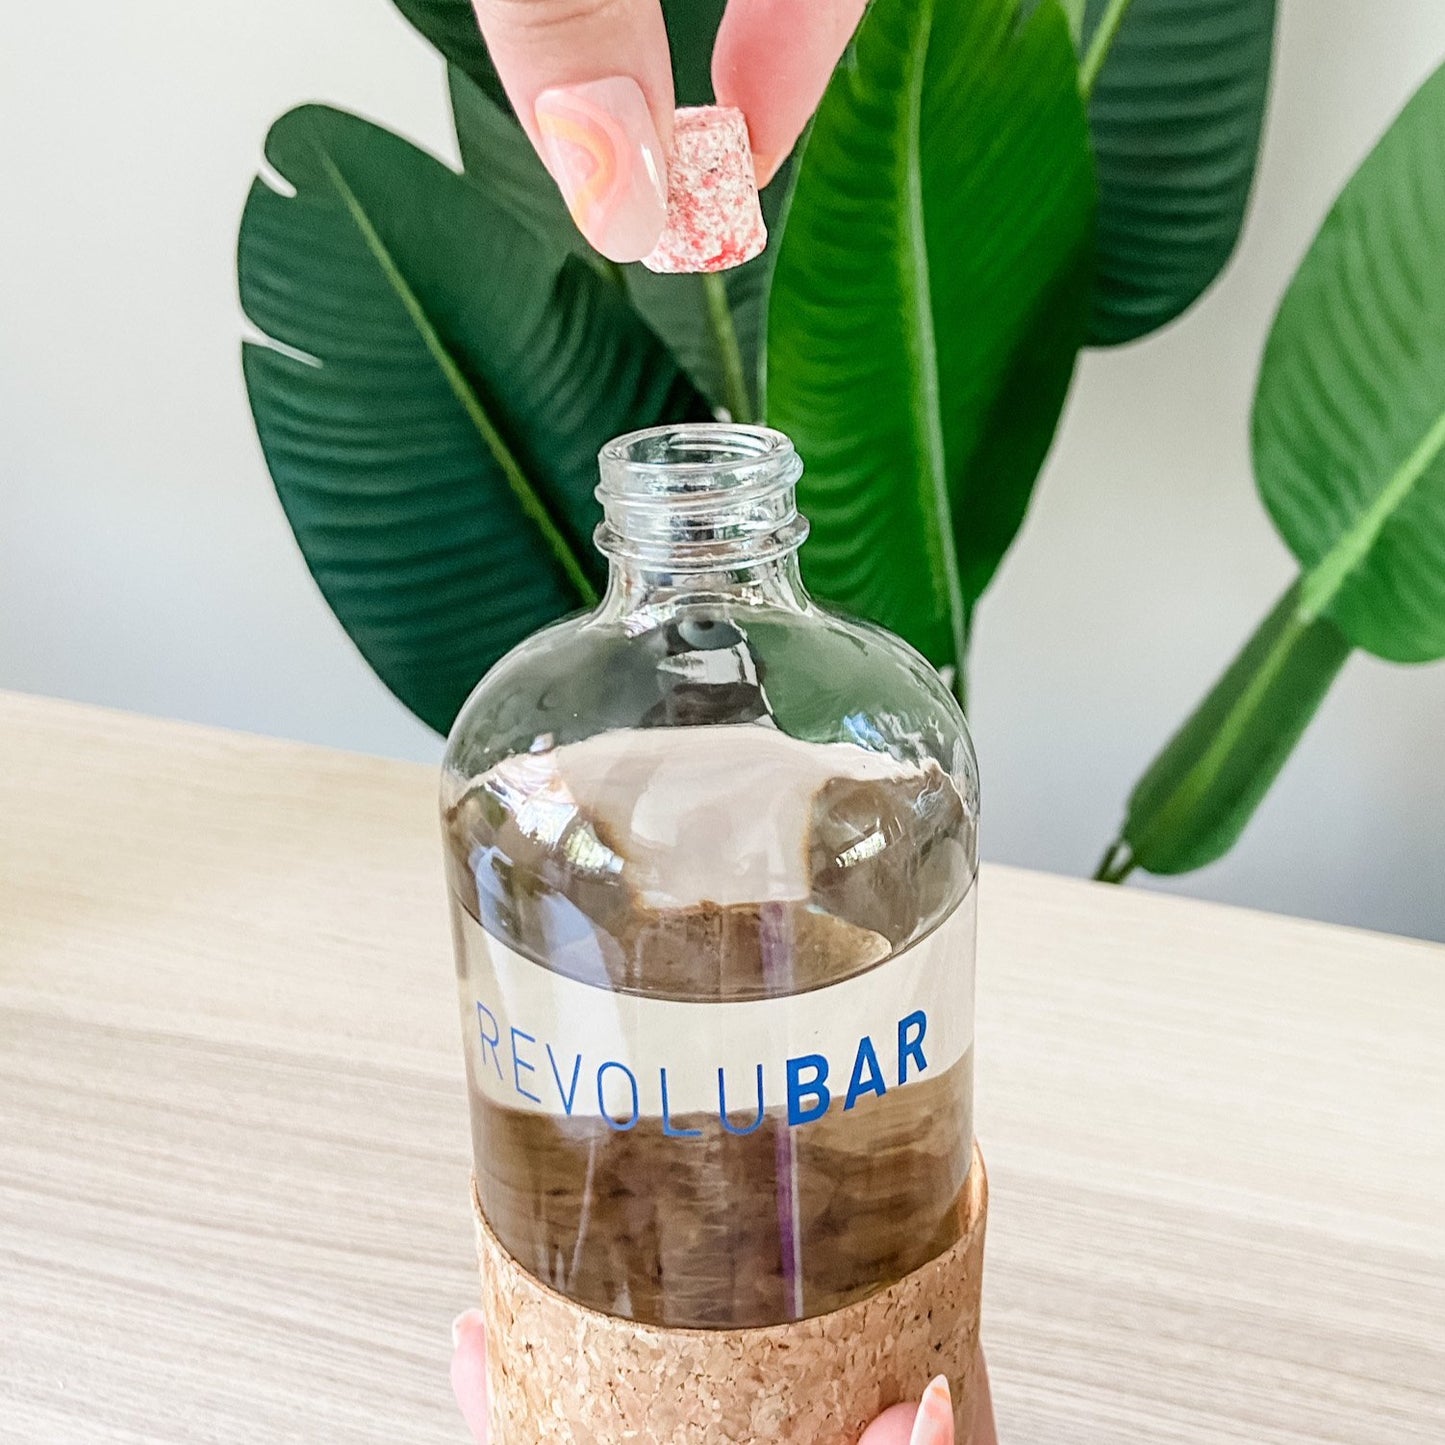 revolubar glass bottle with revolubar all purpose cleaner 